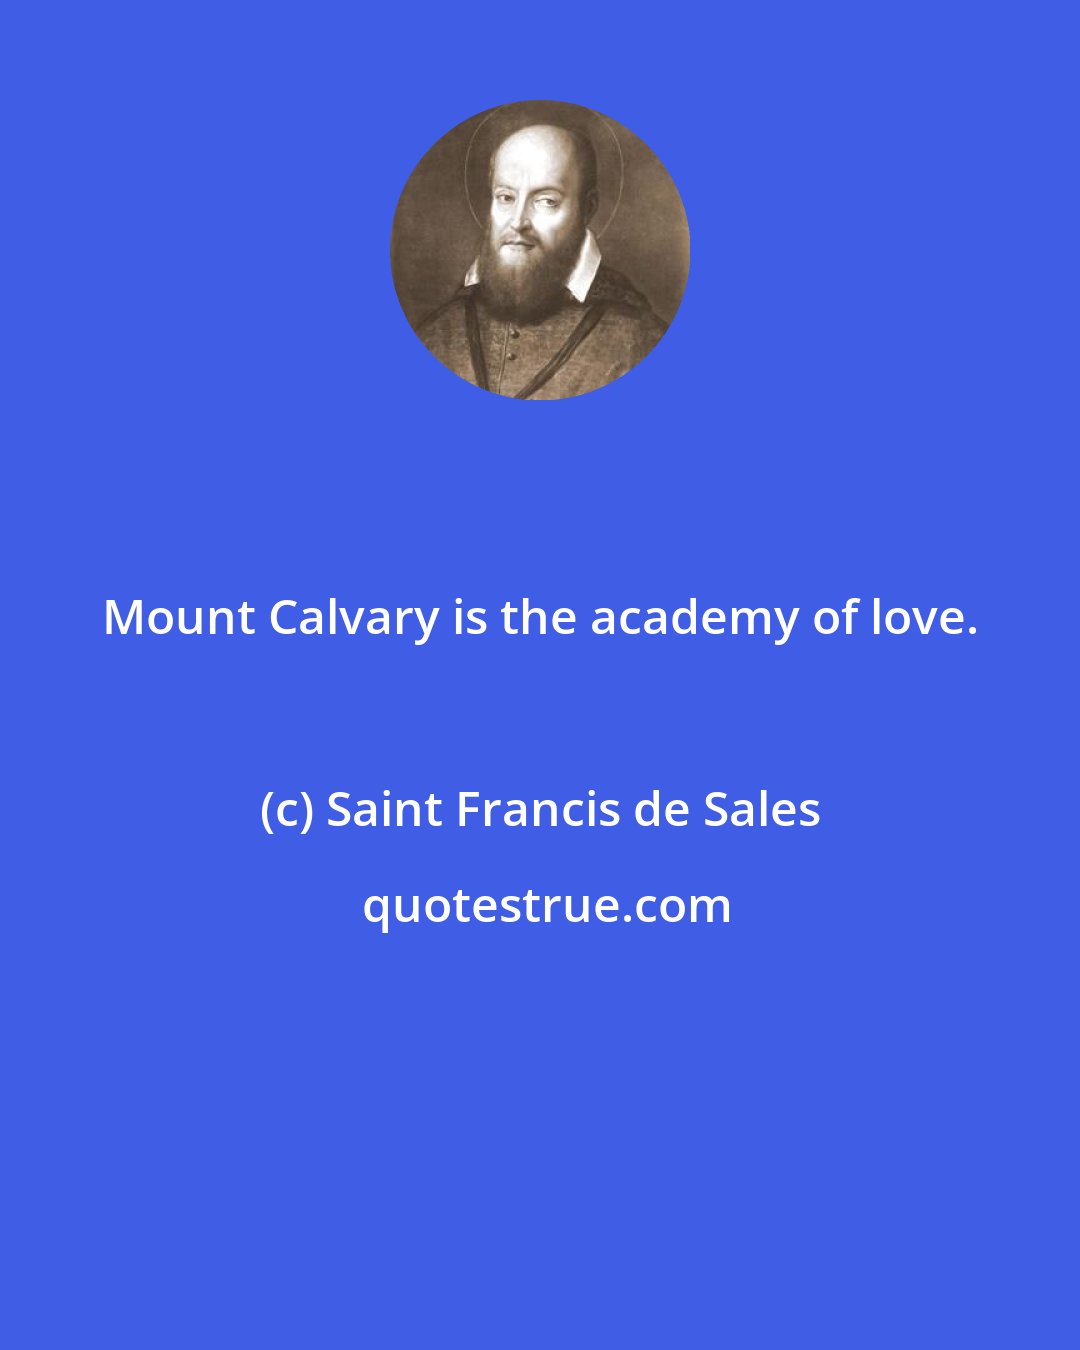 Saint Francis de Sales: Mount Calvary is the academy of love.